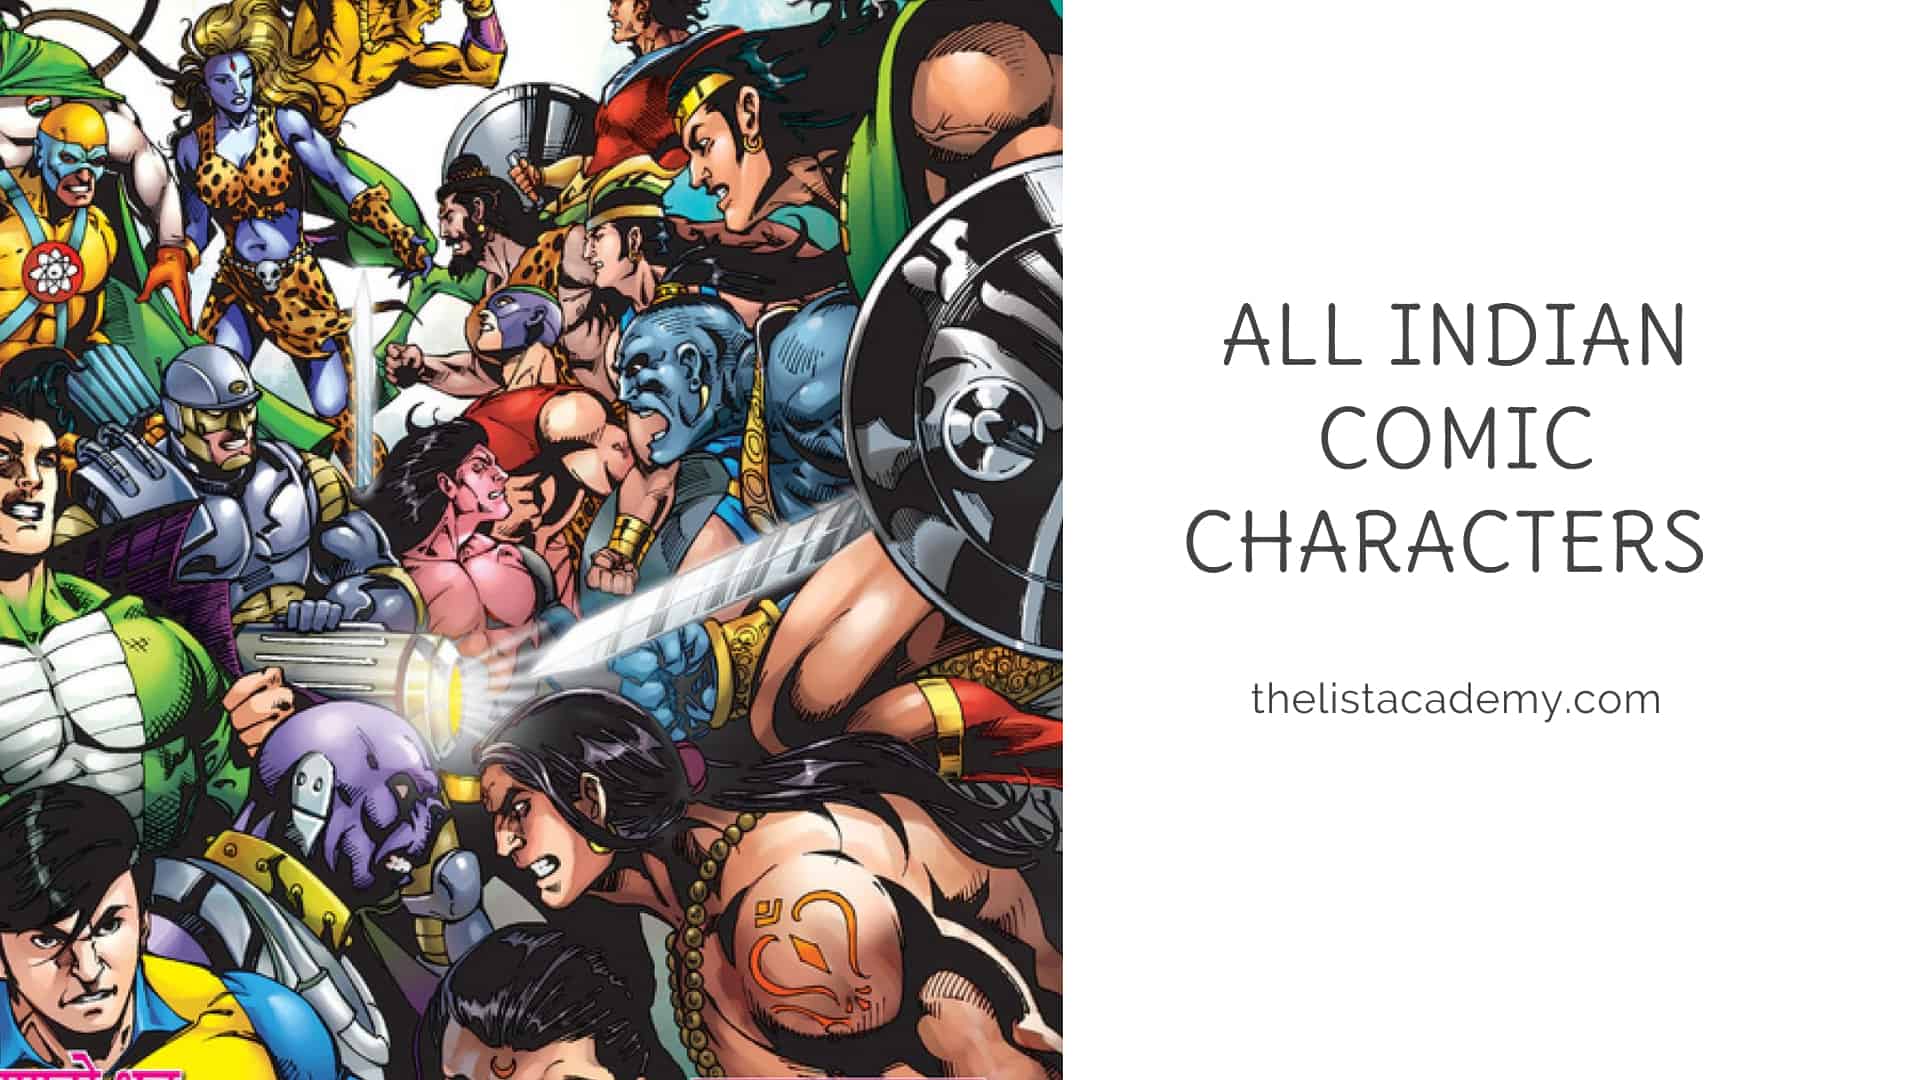 All Indian Comic Superheroes - 300+ Indian Comic Superheros